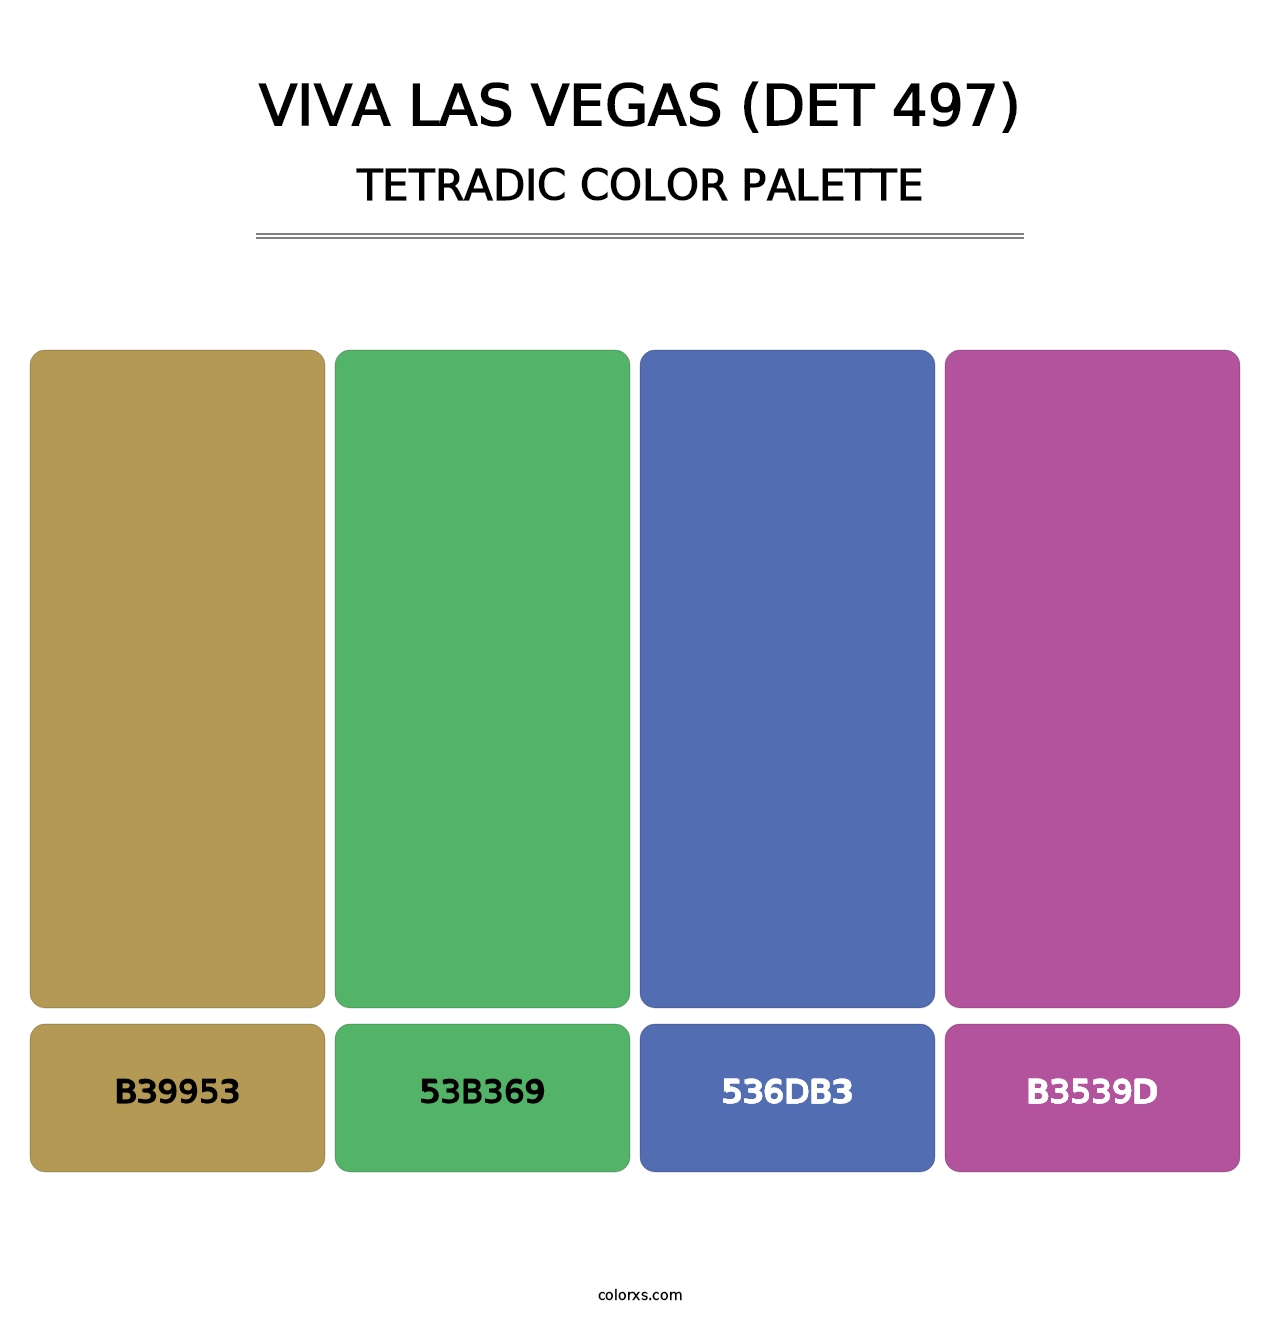 Viva Las Vegas (DET 497) - Tetradic Color Palette